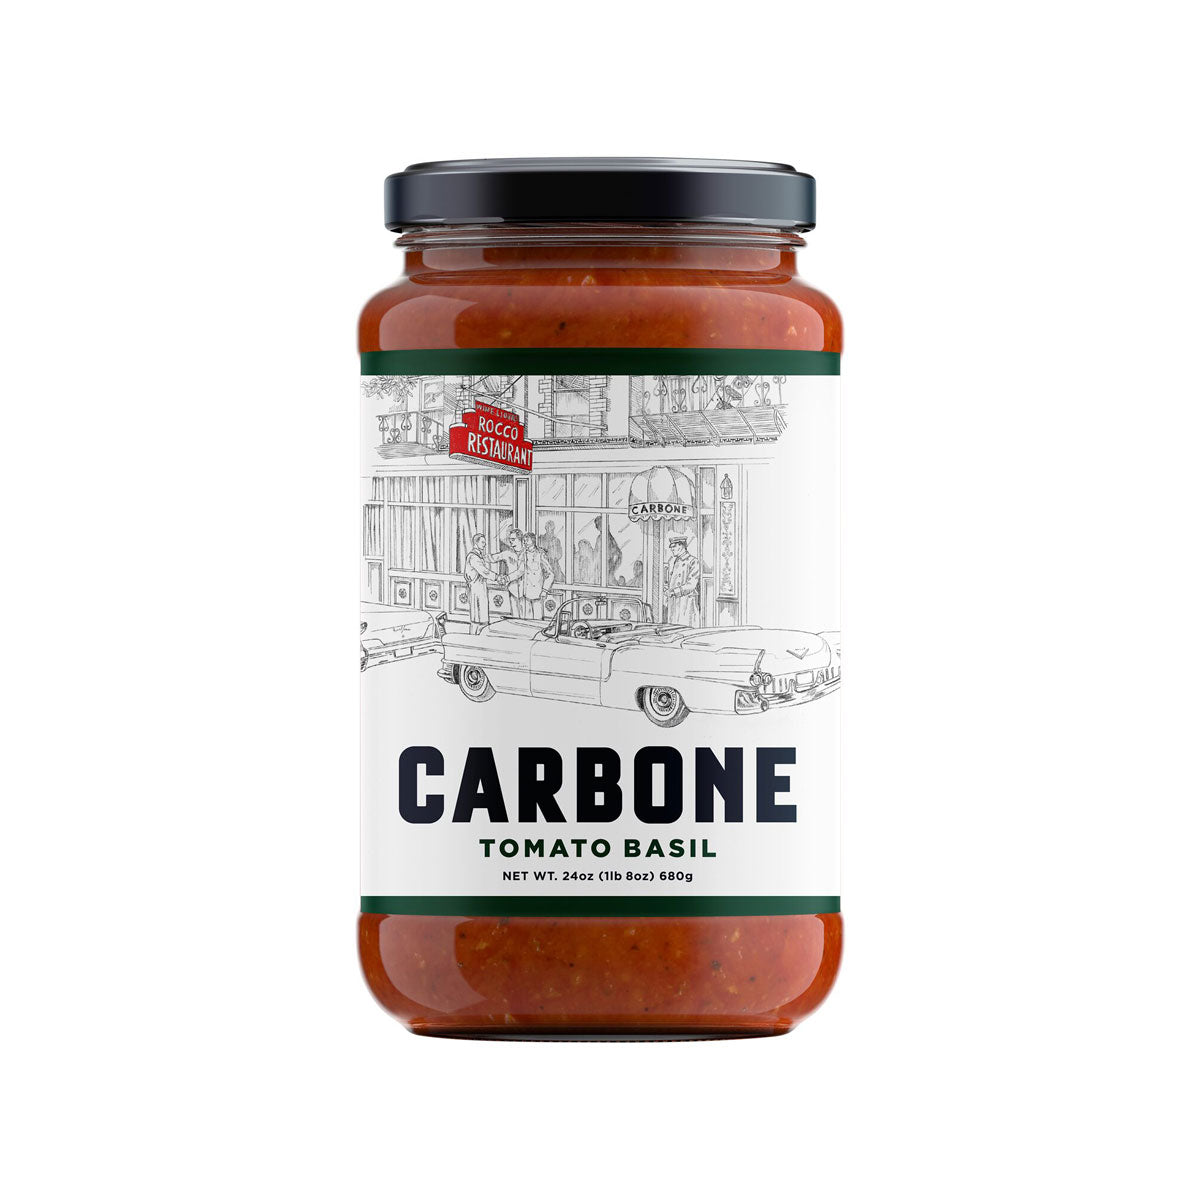 Carbone Tomato Basil Sauce 24 Oz Jar